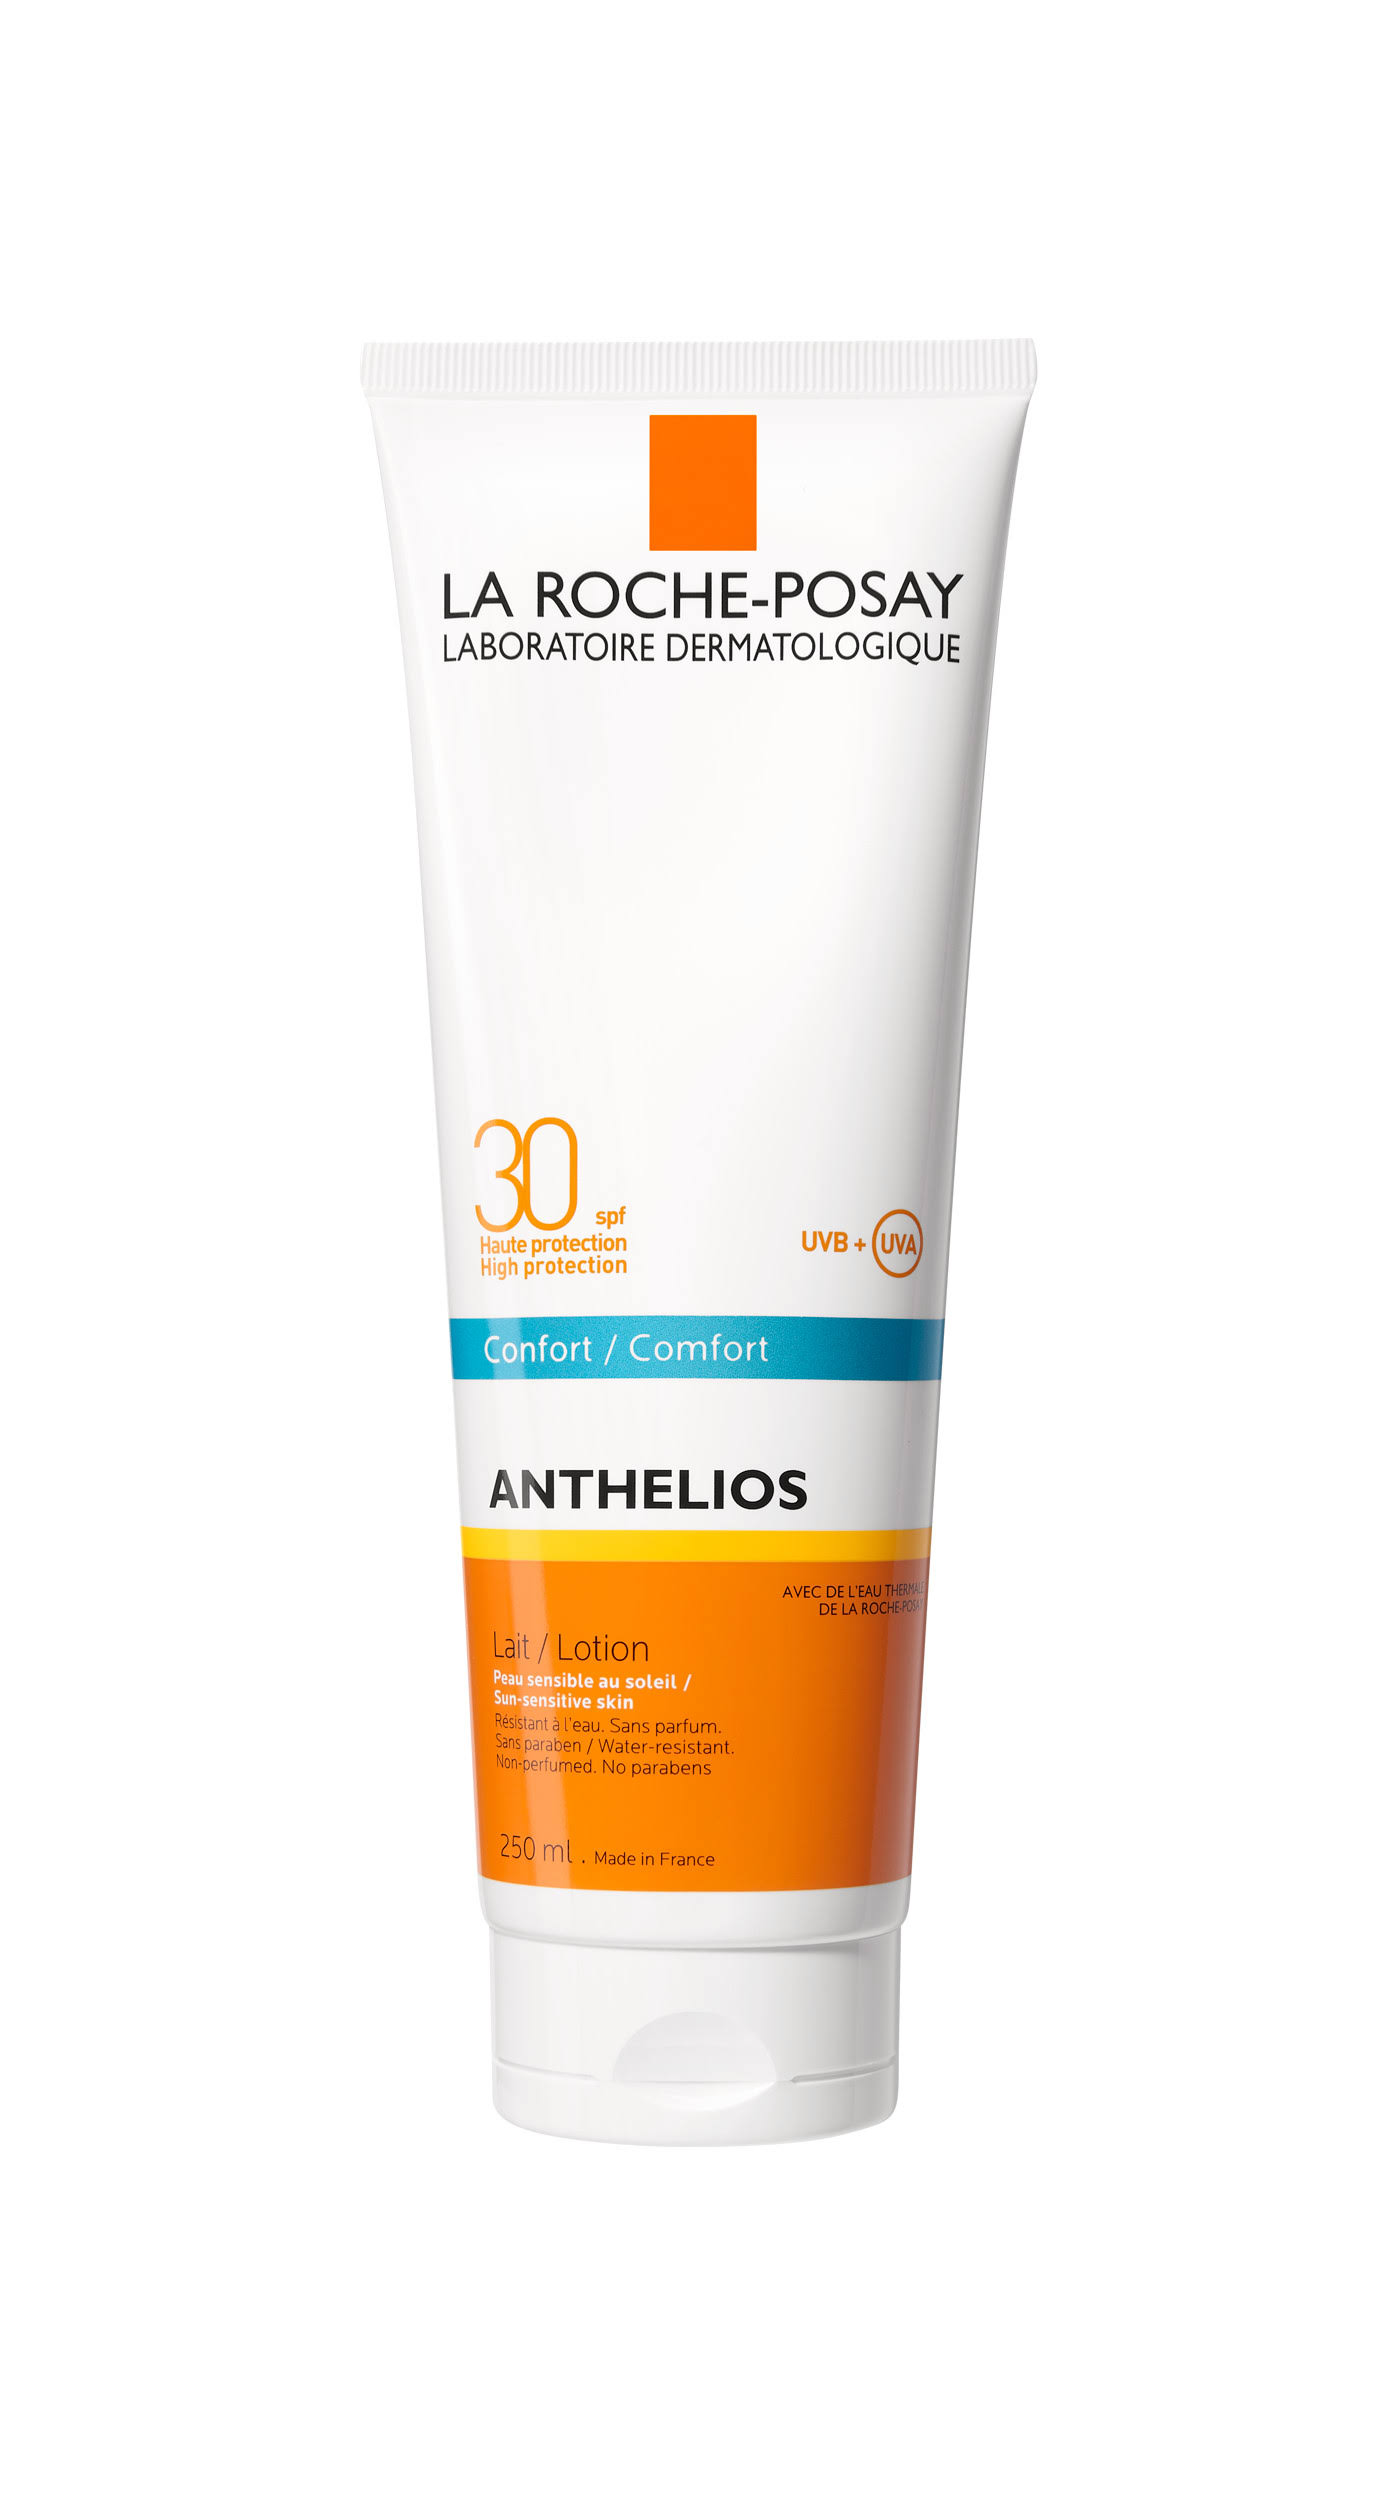 La Roche Posay Anthelios Body Lotion - SPF 30, 250ml